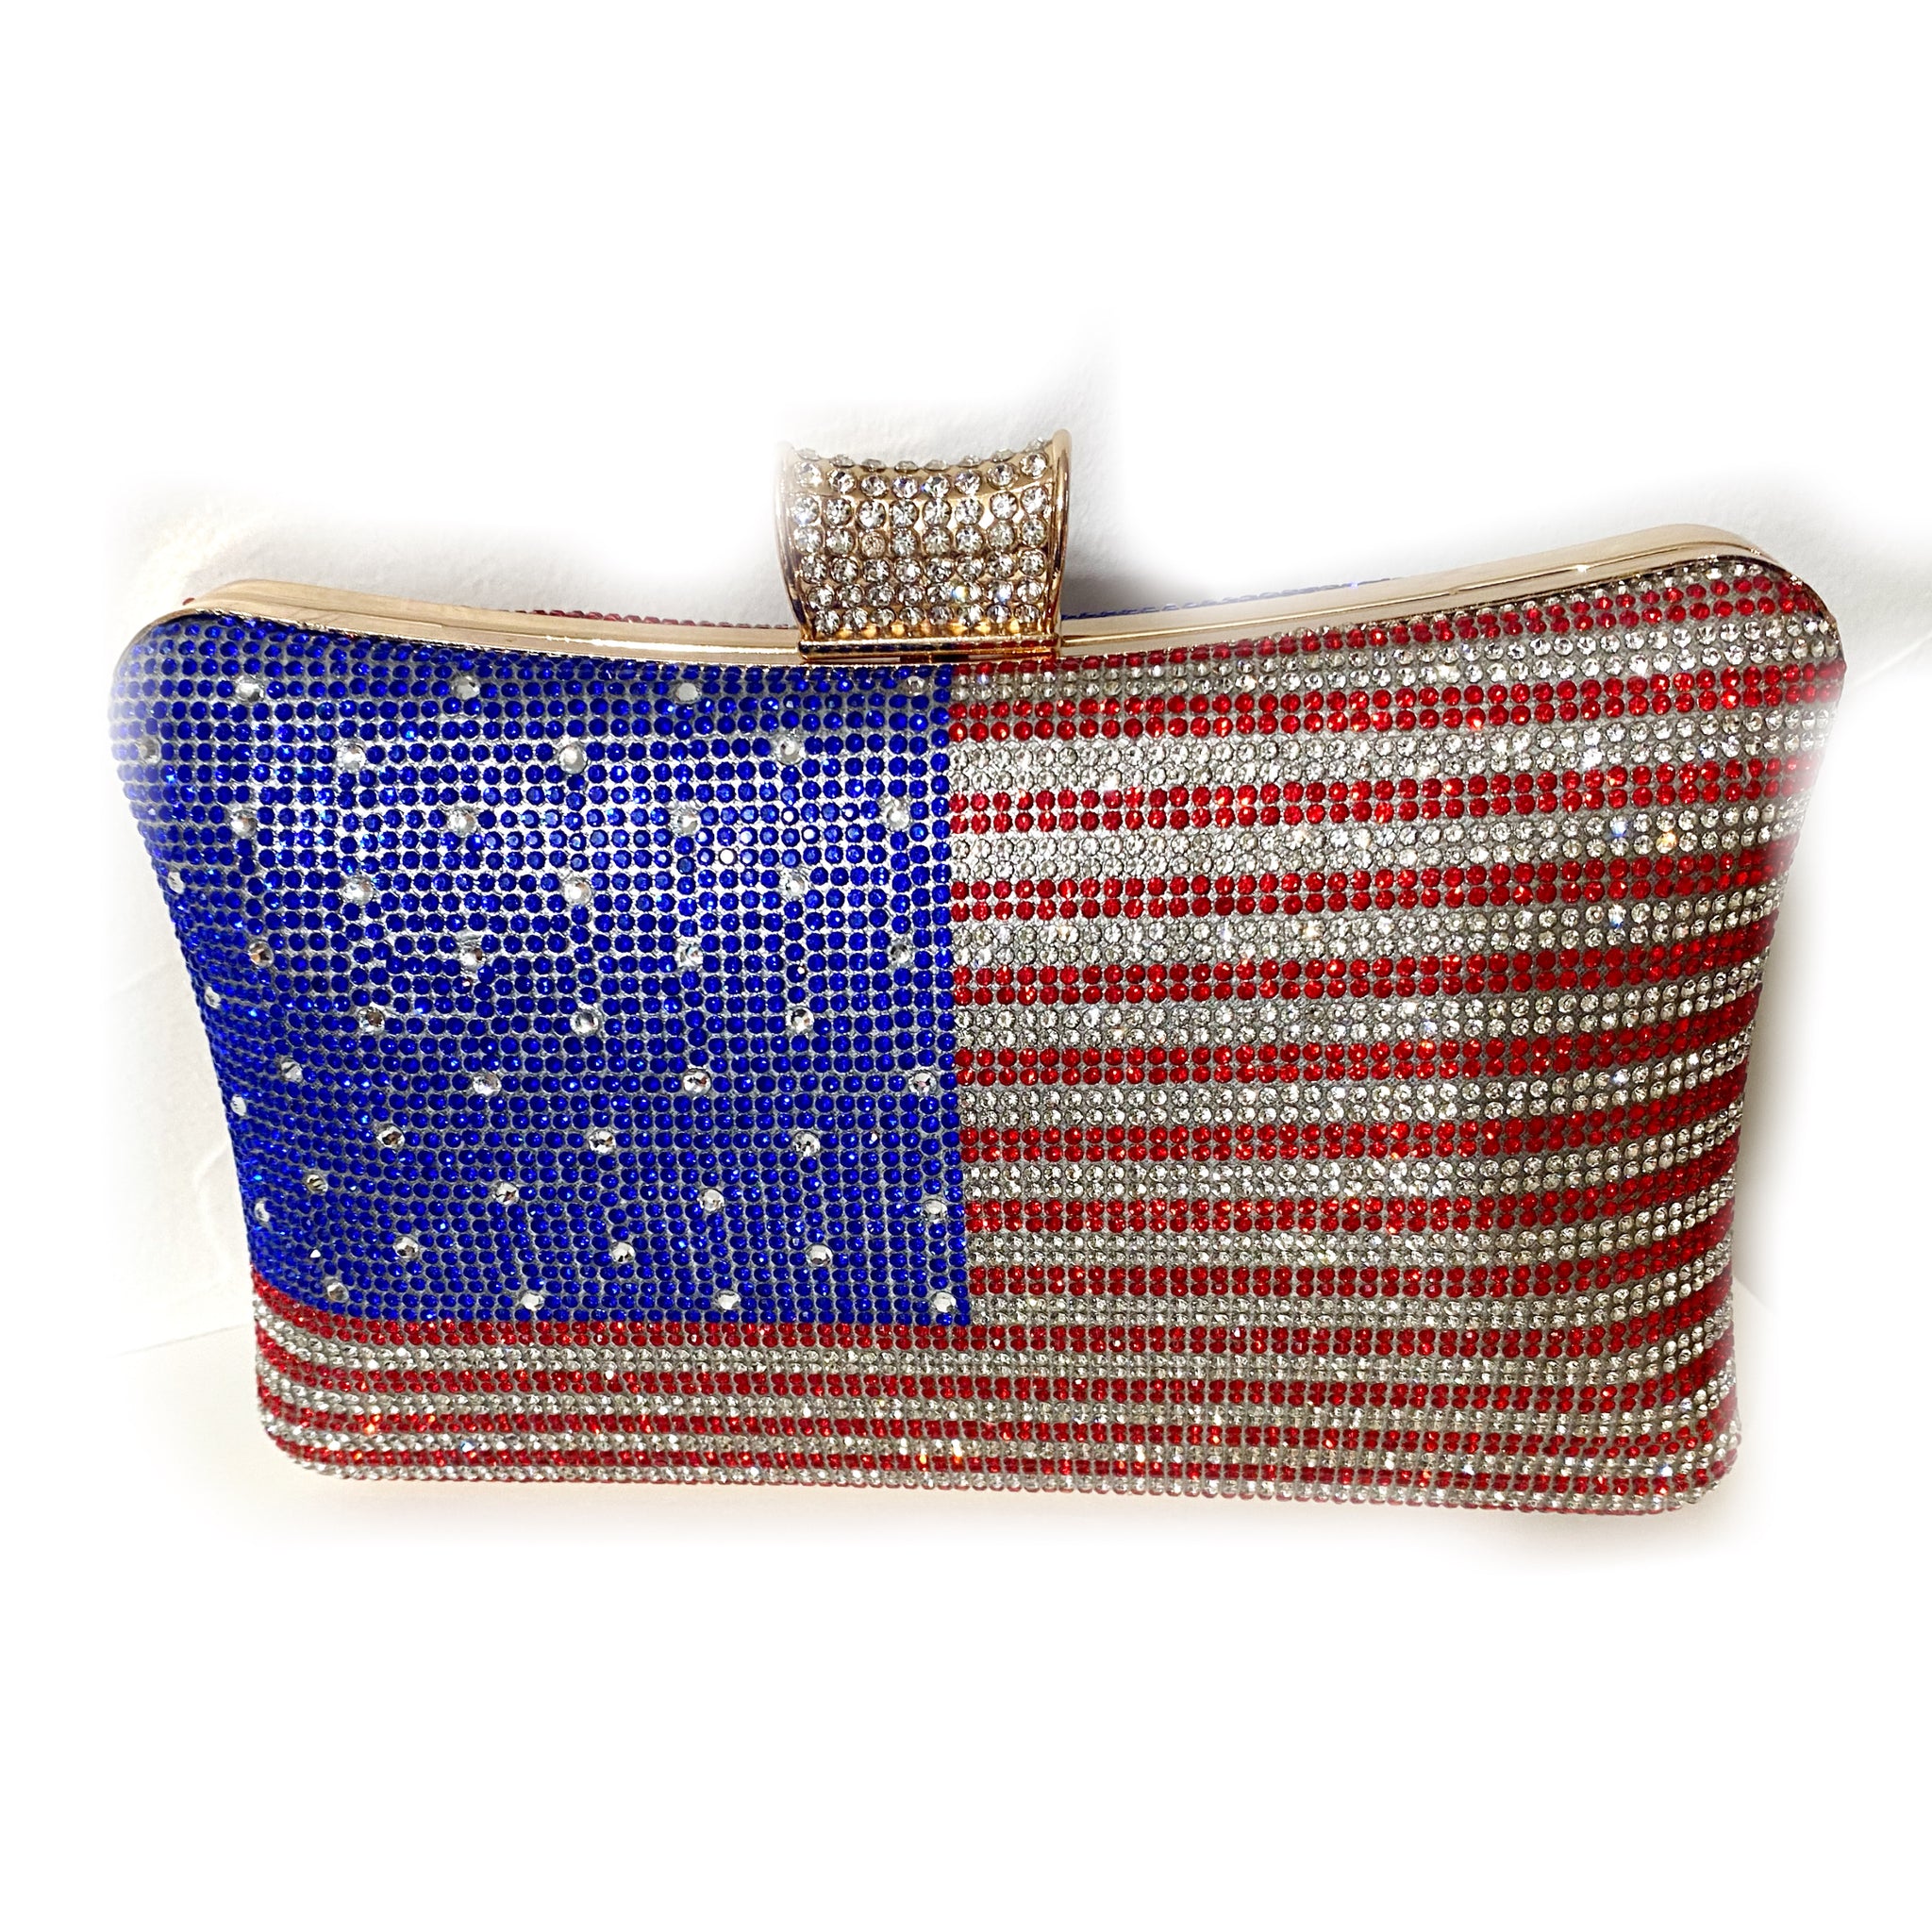 American Flag Handbag